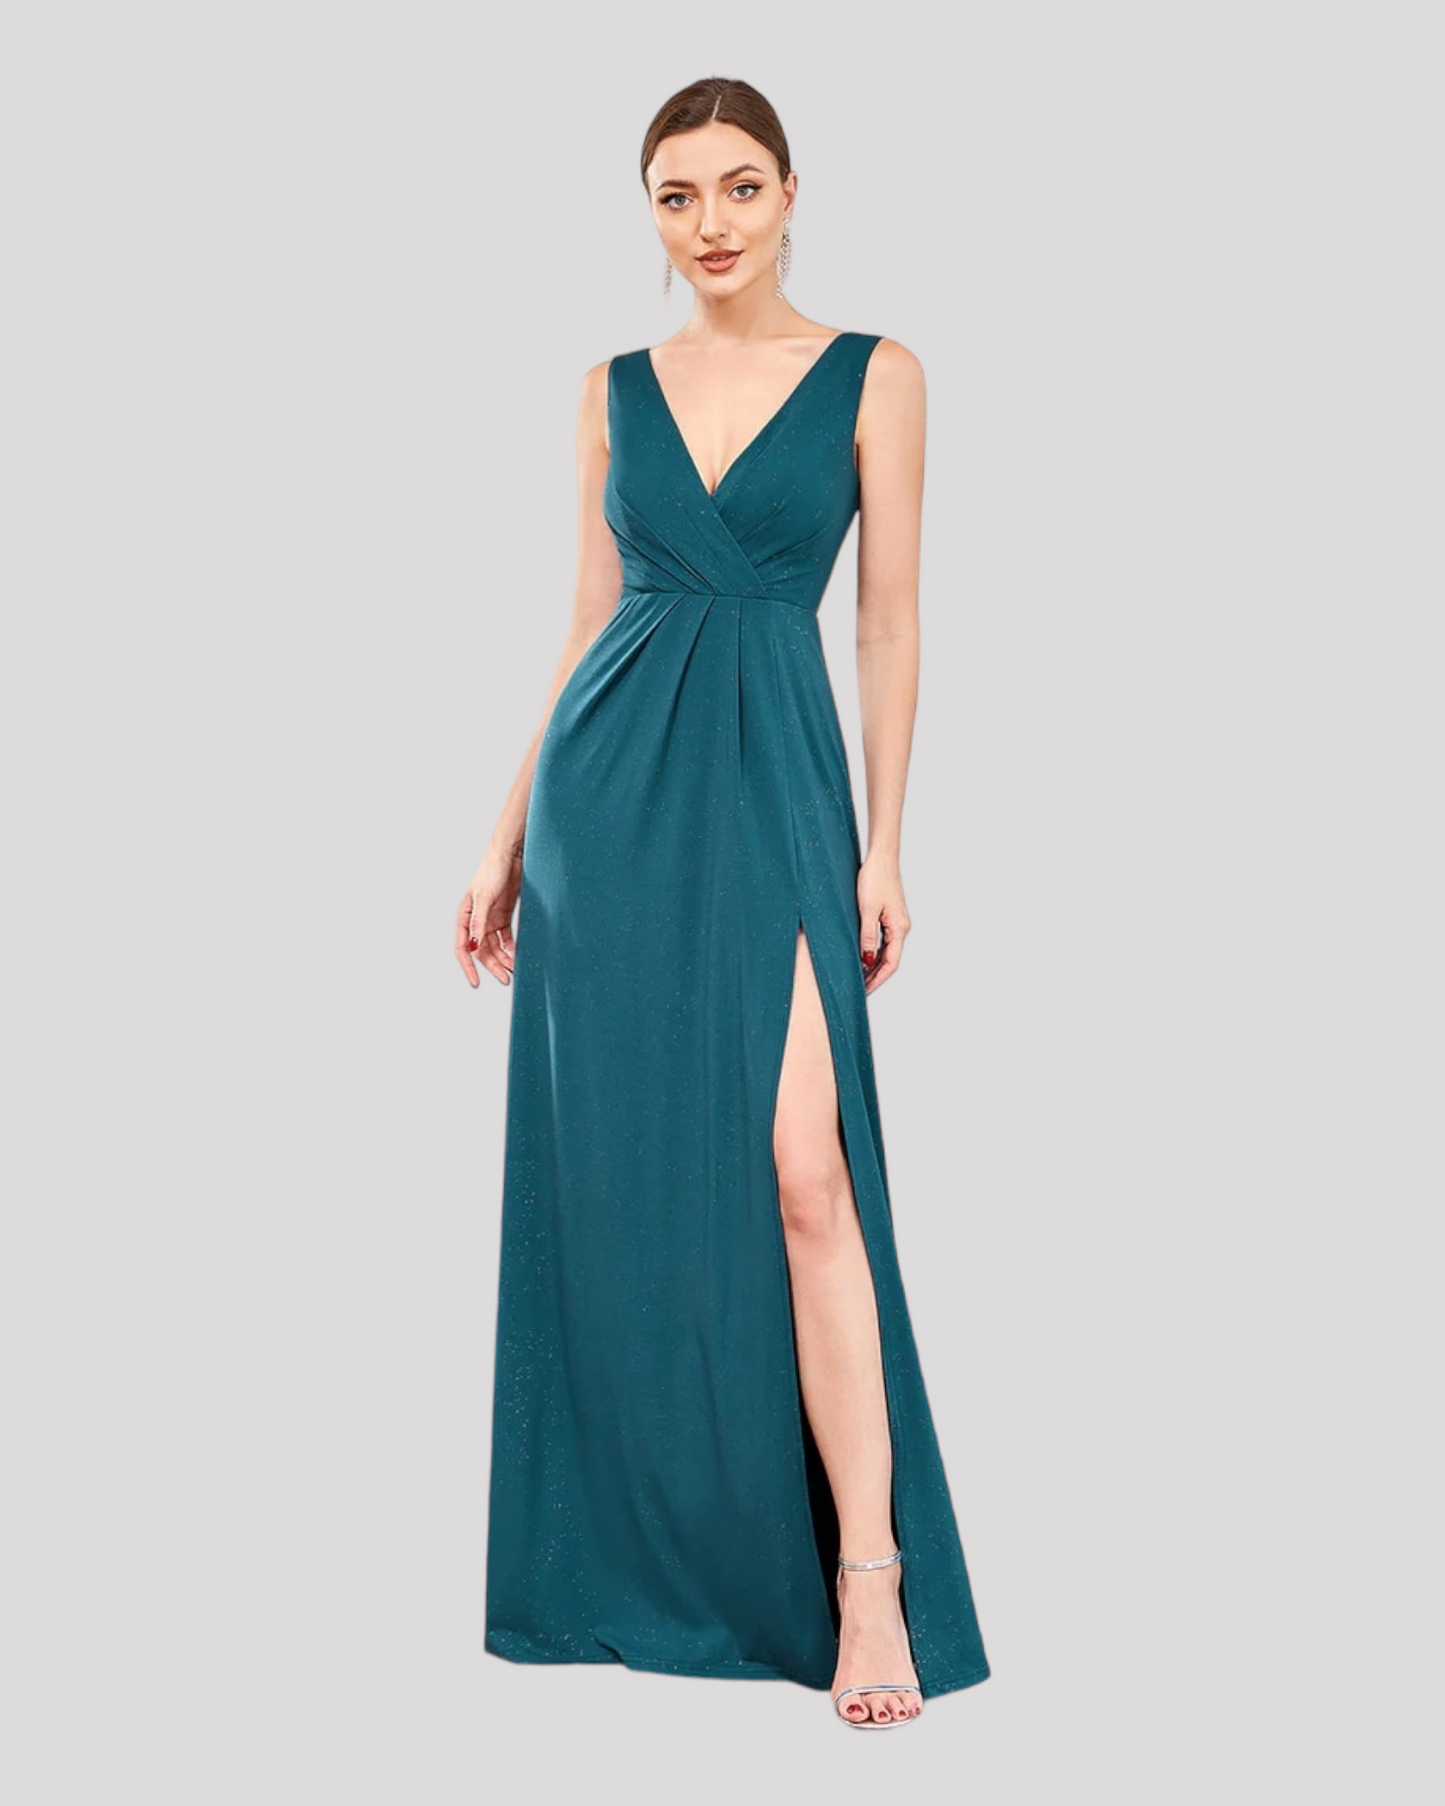 VNeck Elegant Evening Dress with Split and pleated Bodice